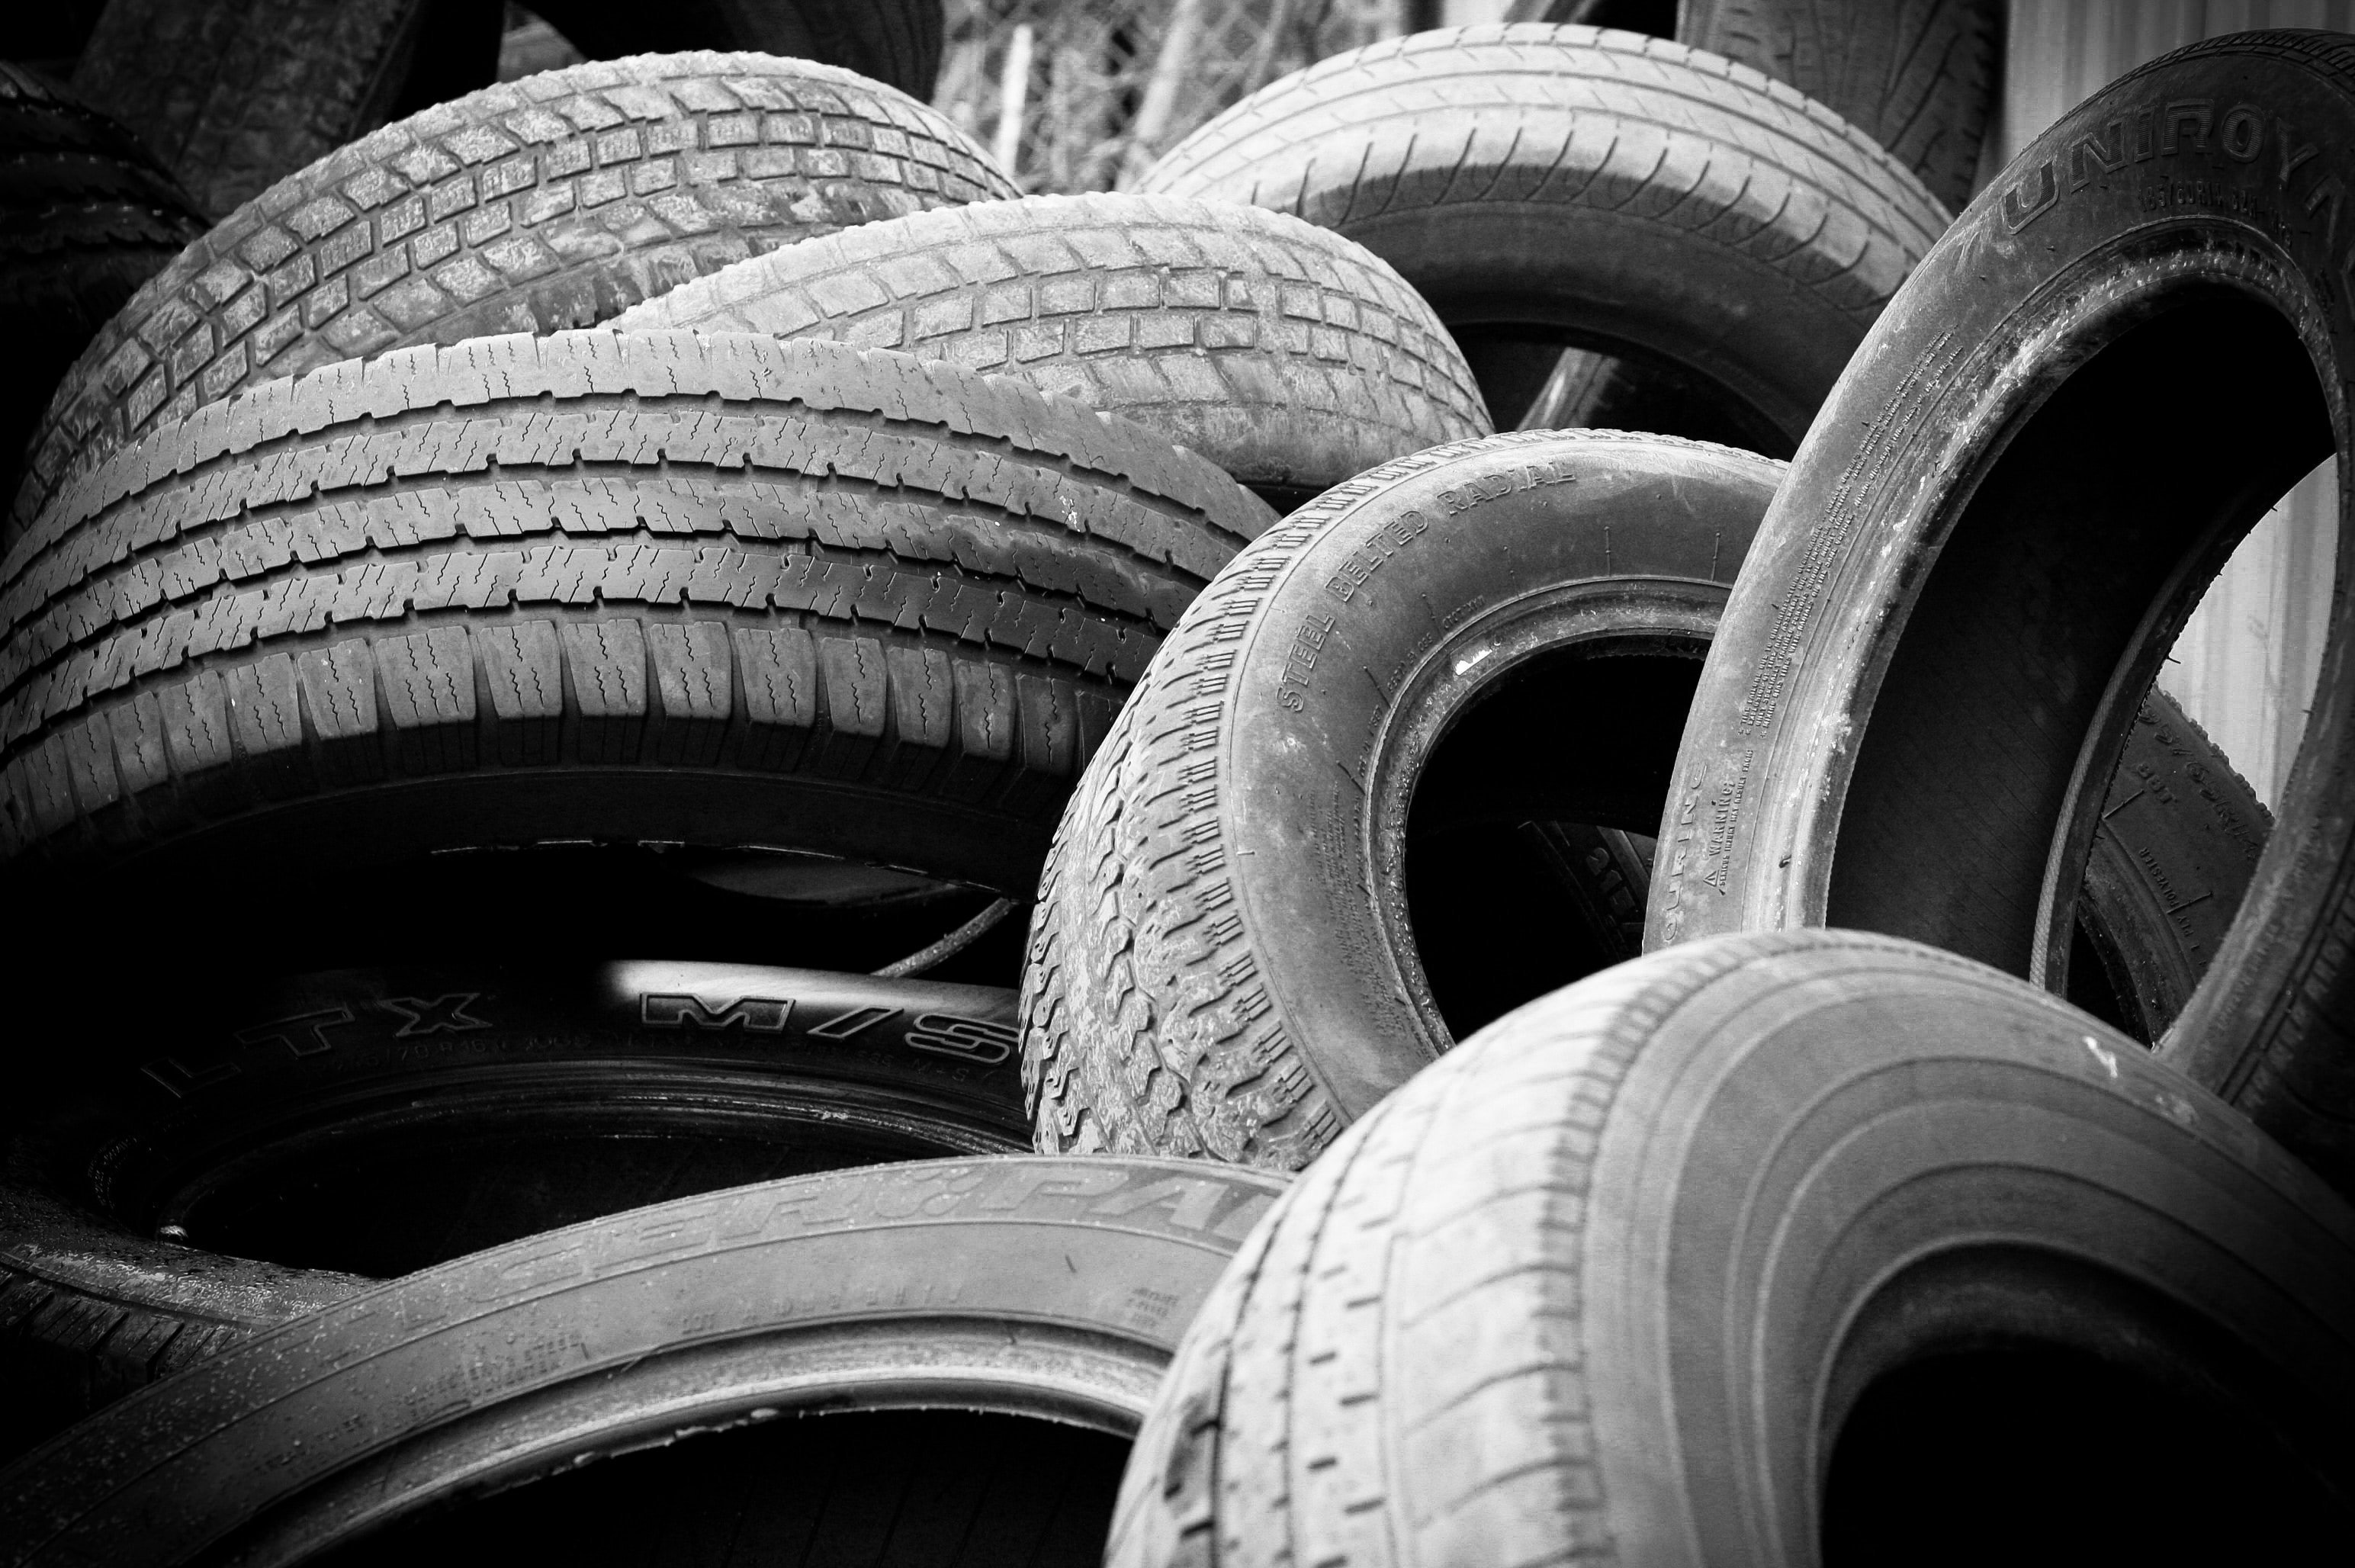 Tire price increases inevitable in 2021